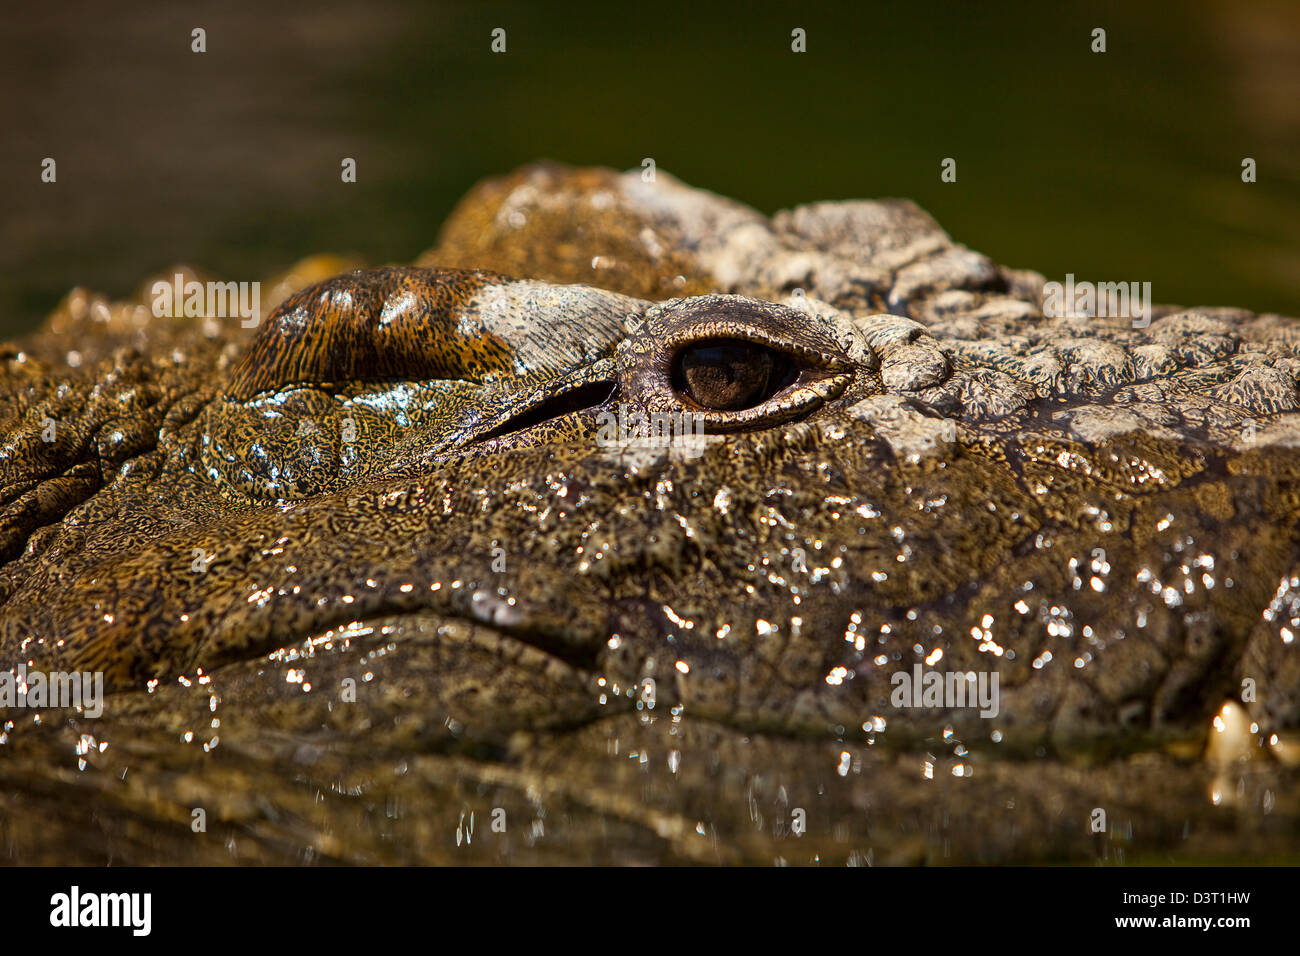 Crocodile eye in water, Durban, South Africa Stock Photo